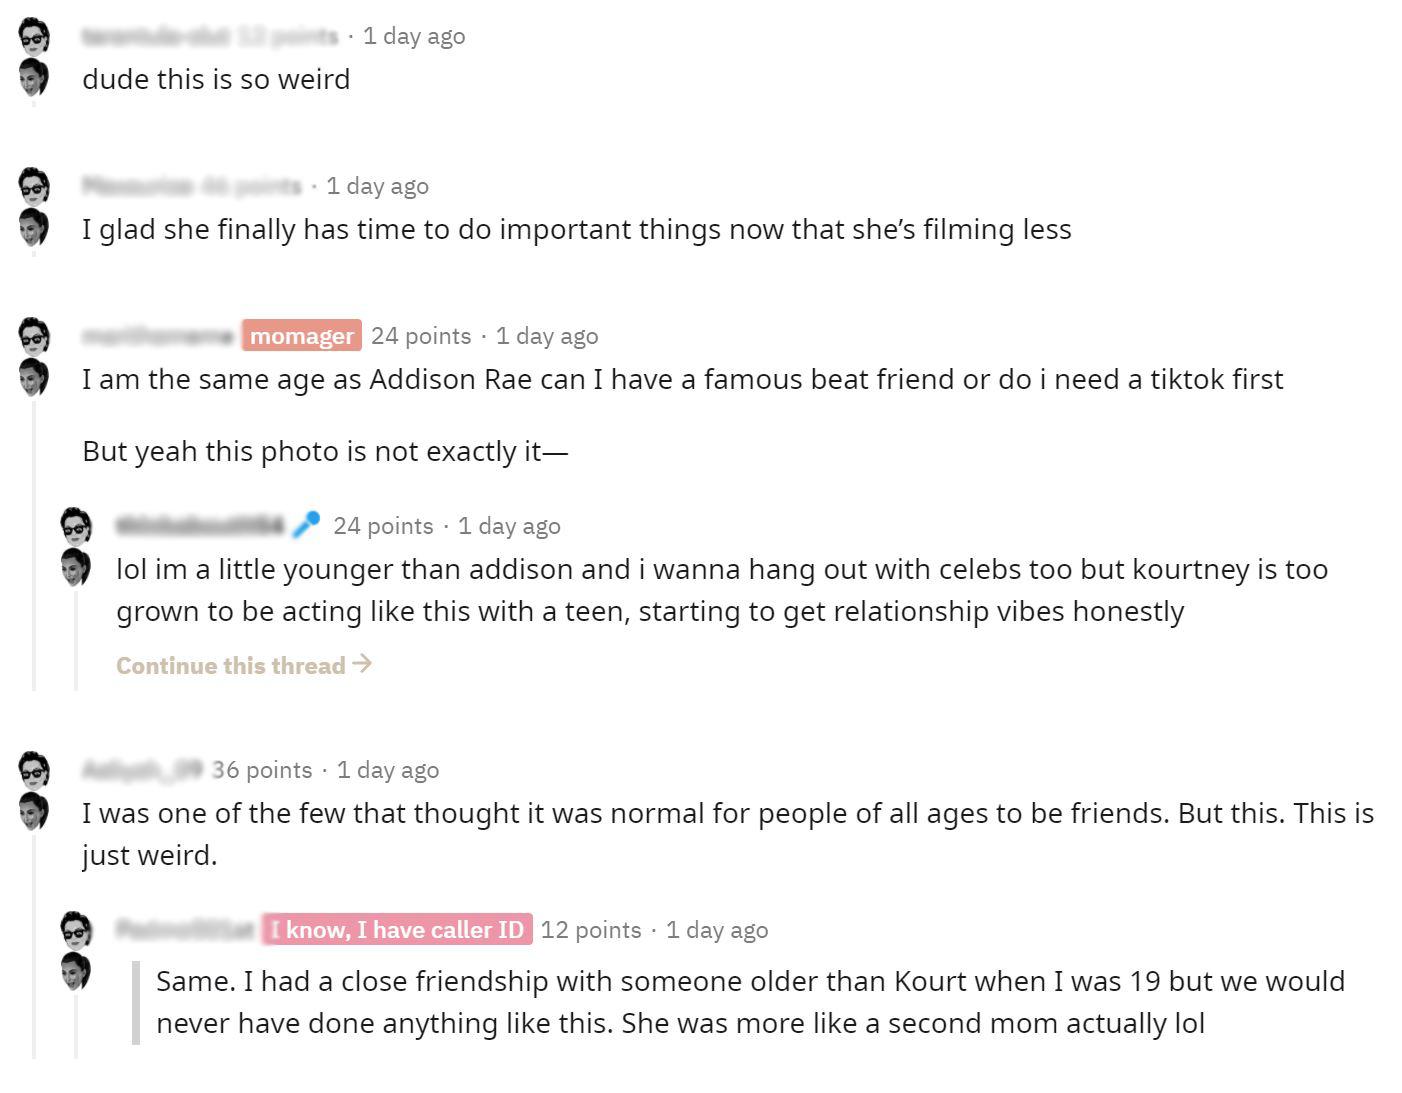 Reddit commenters chime in on the Addison Rae / Kourtney Kardashian photos.